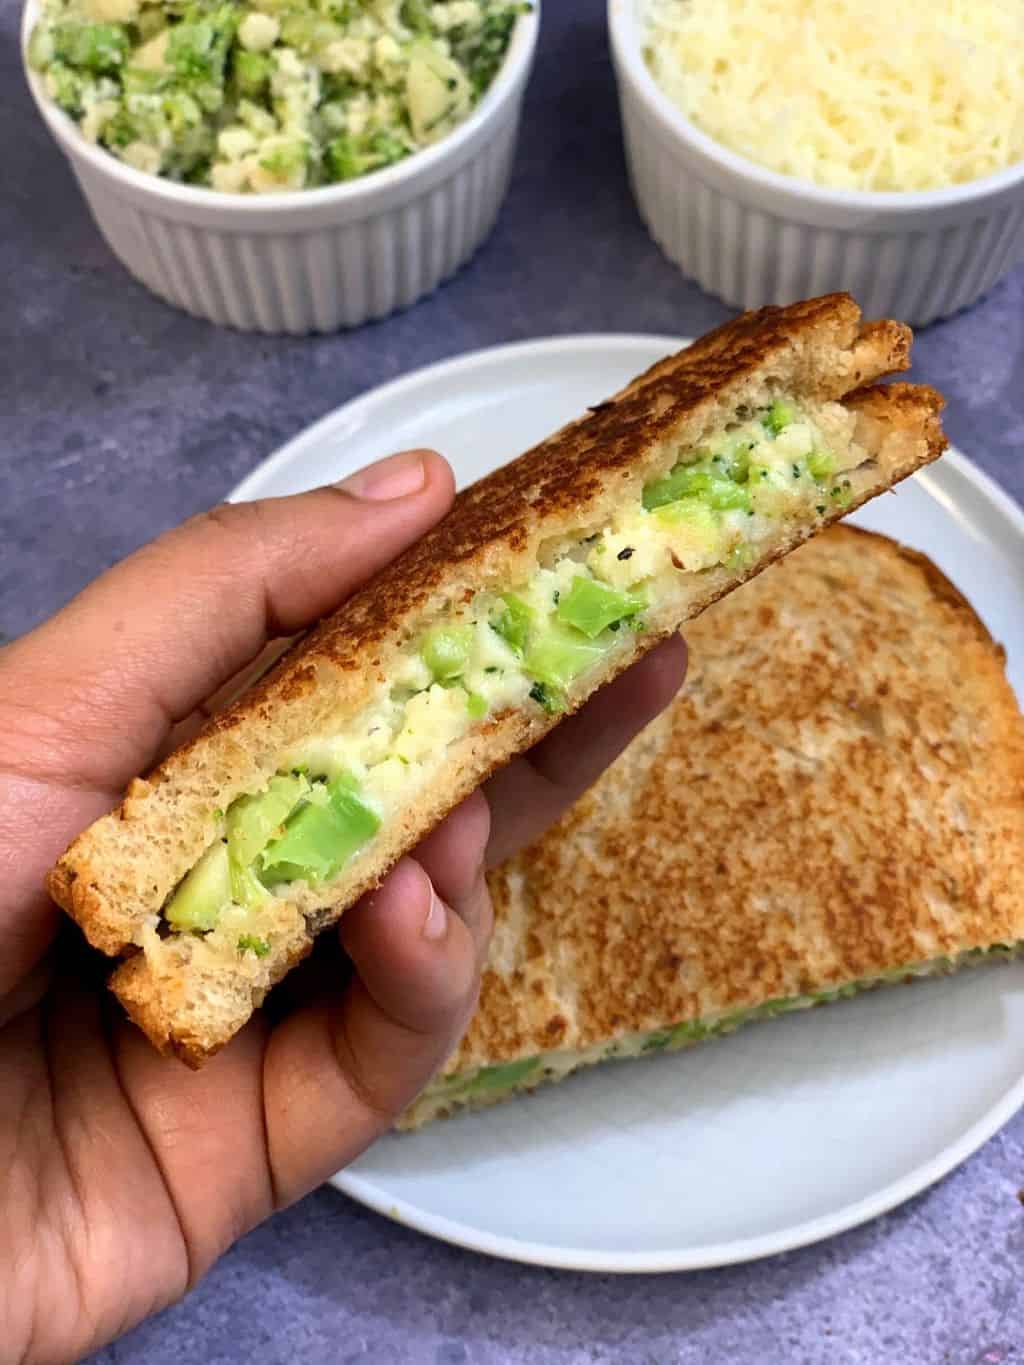 holding Broccoli mayo sandwich in left hand 